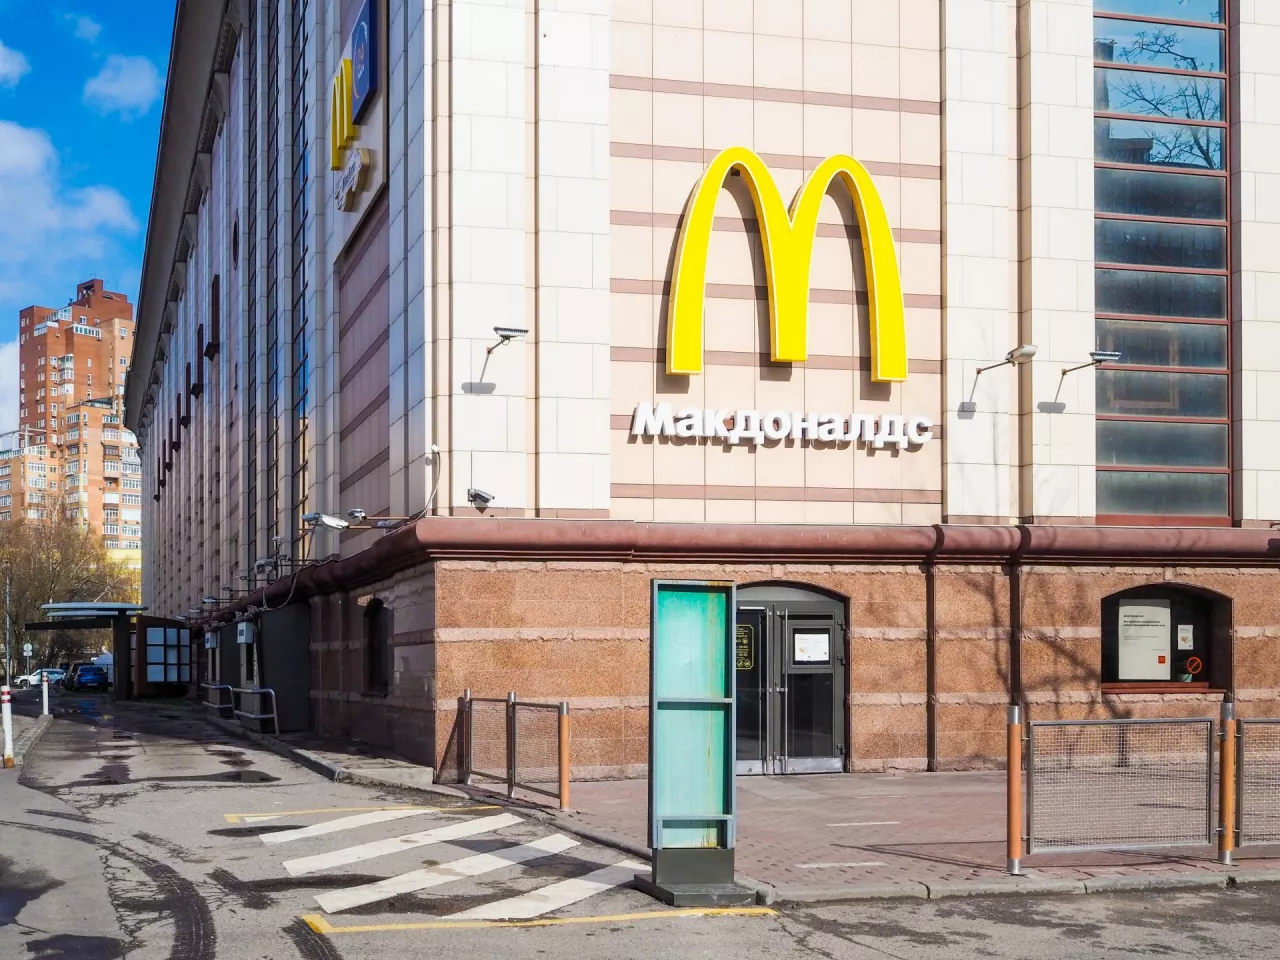 Restauracja sieci McDonald‘s (shutterstock.com)